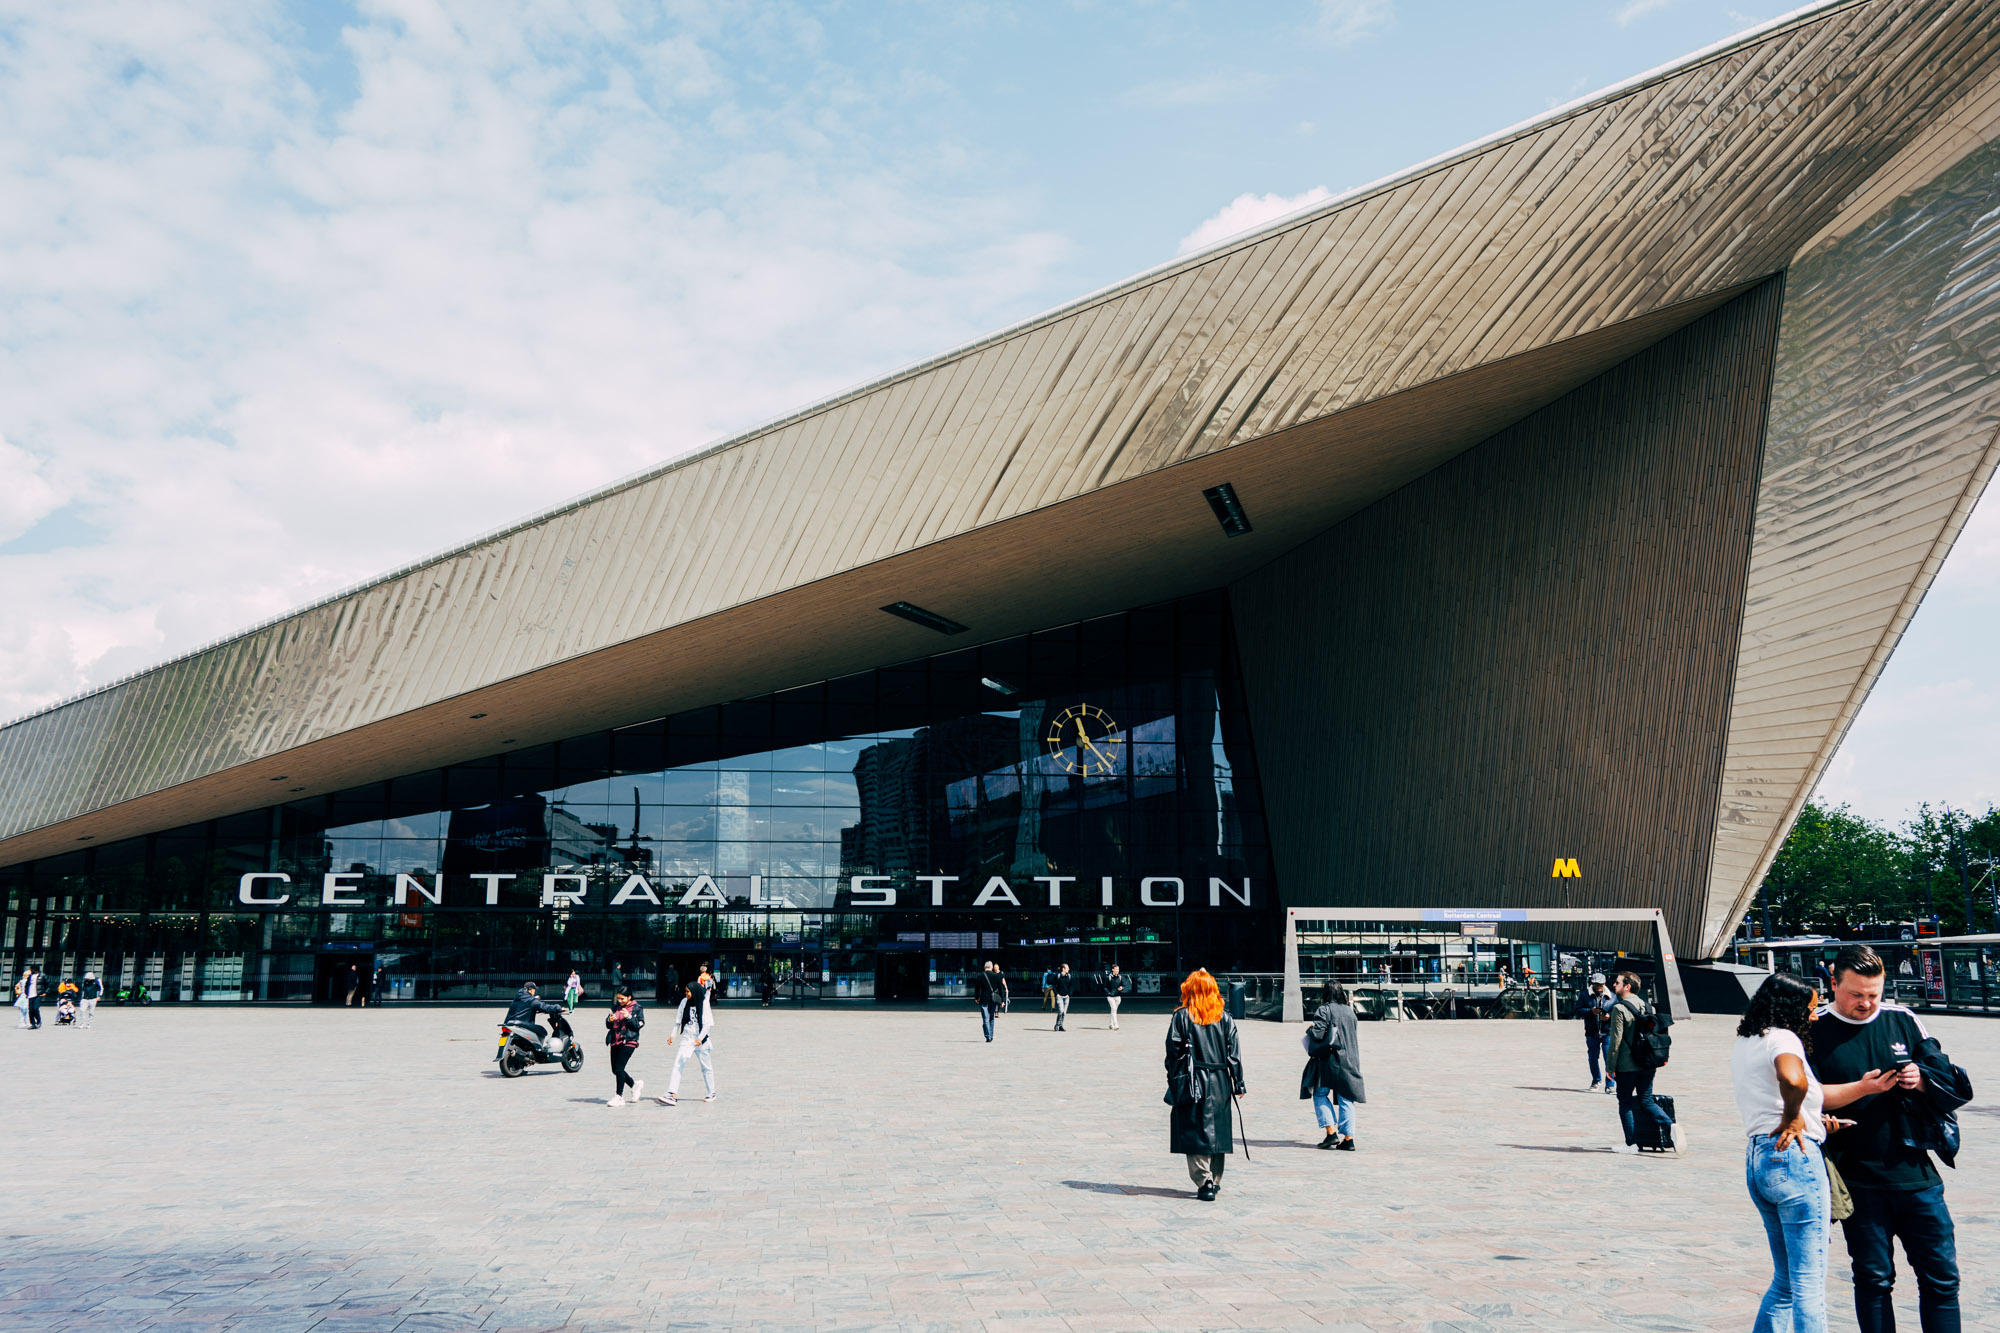  Centraal Station - Rotterdam - Netherlands - Europe